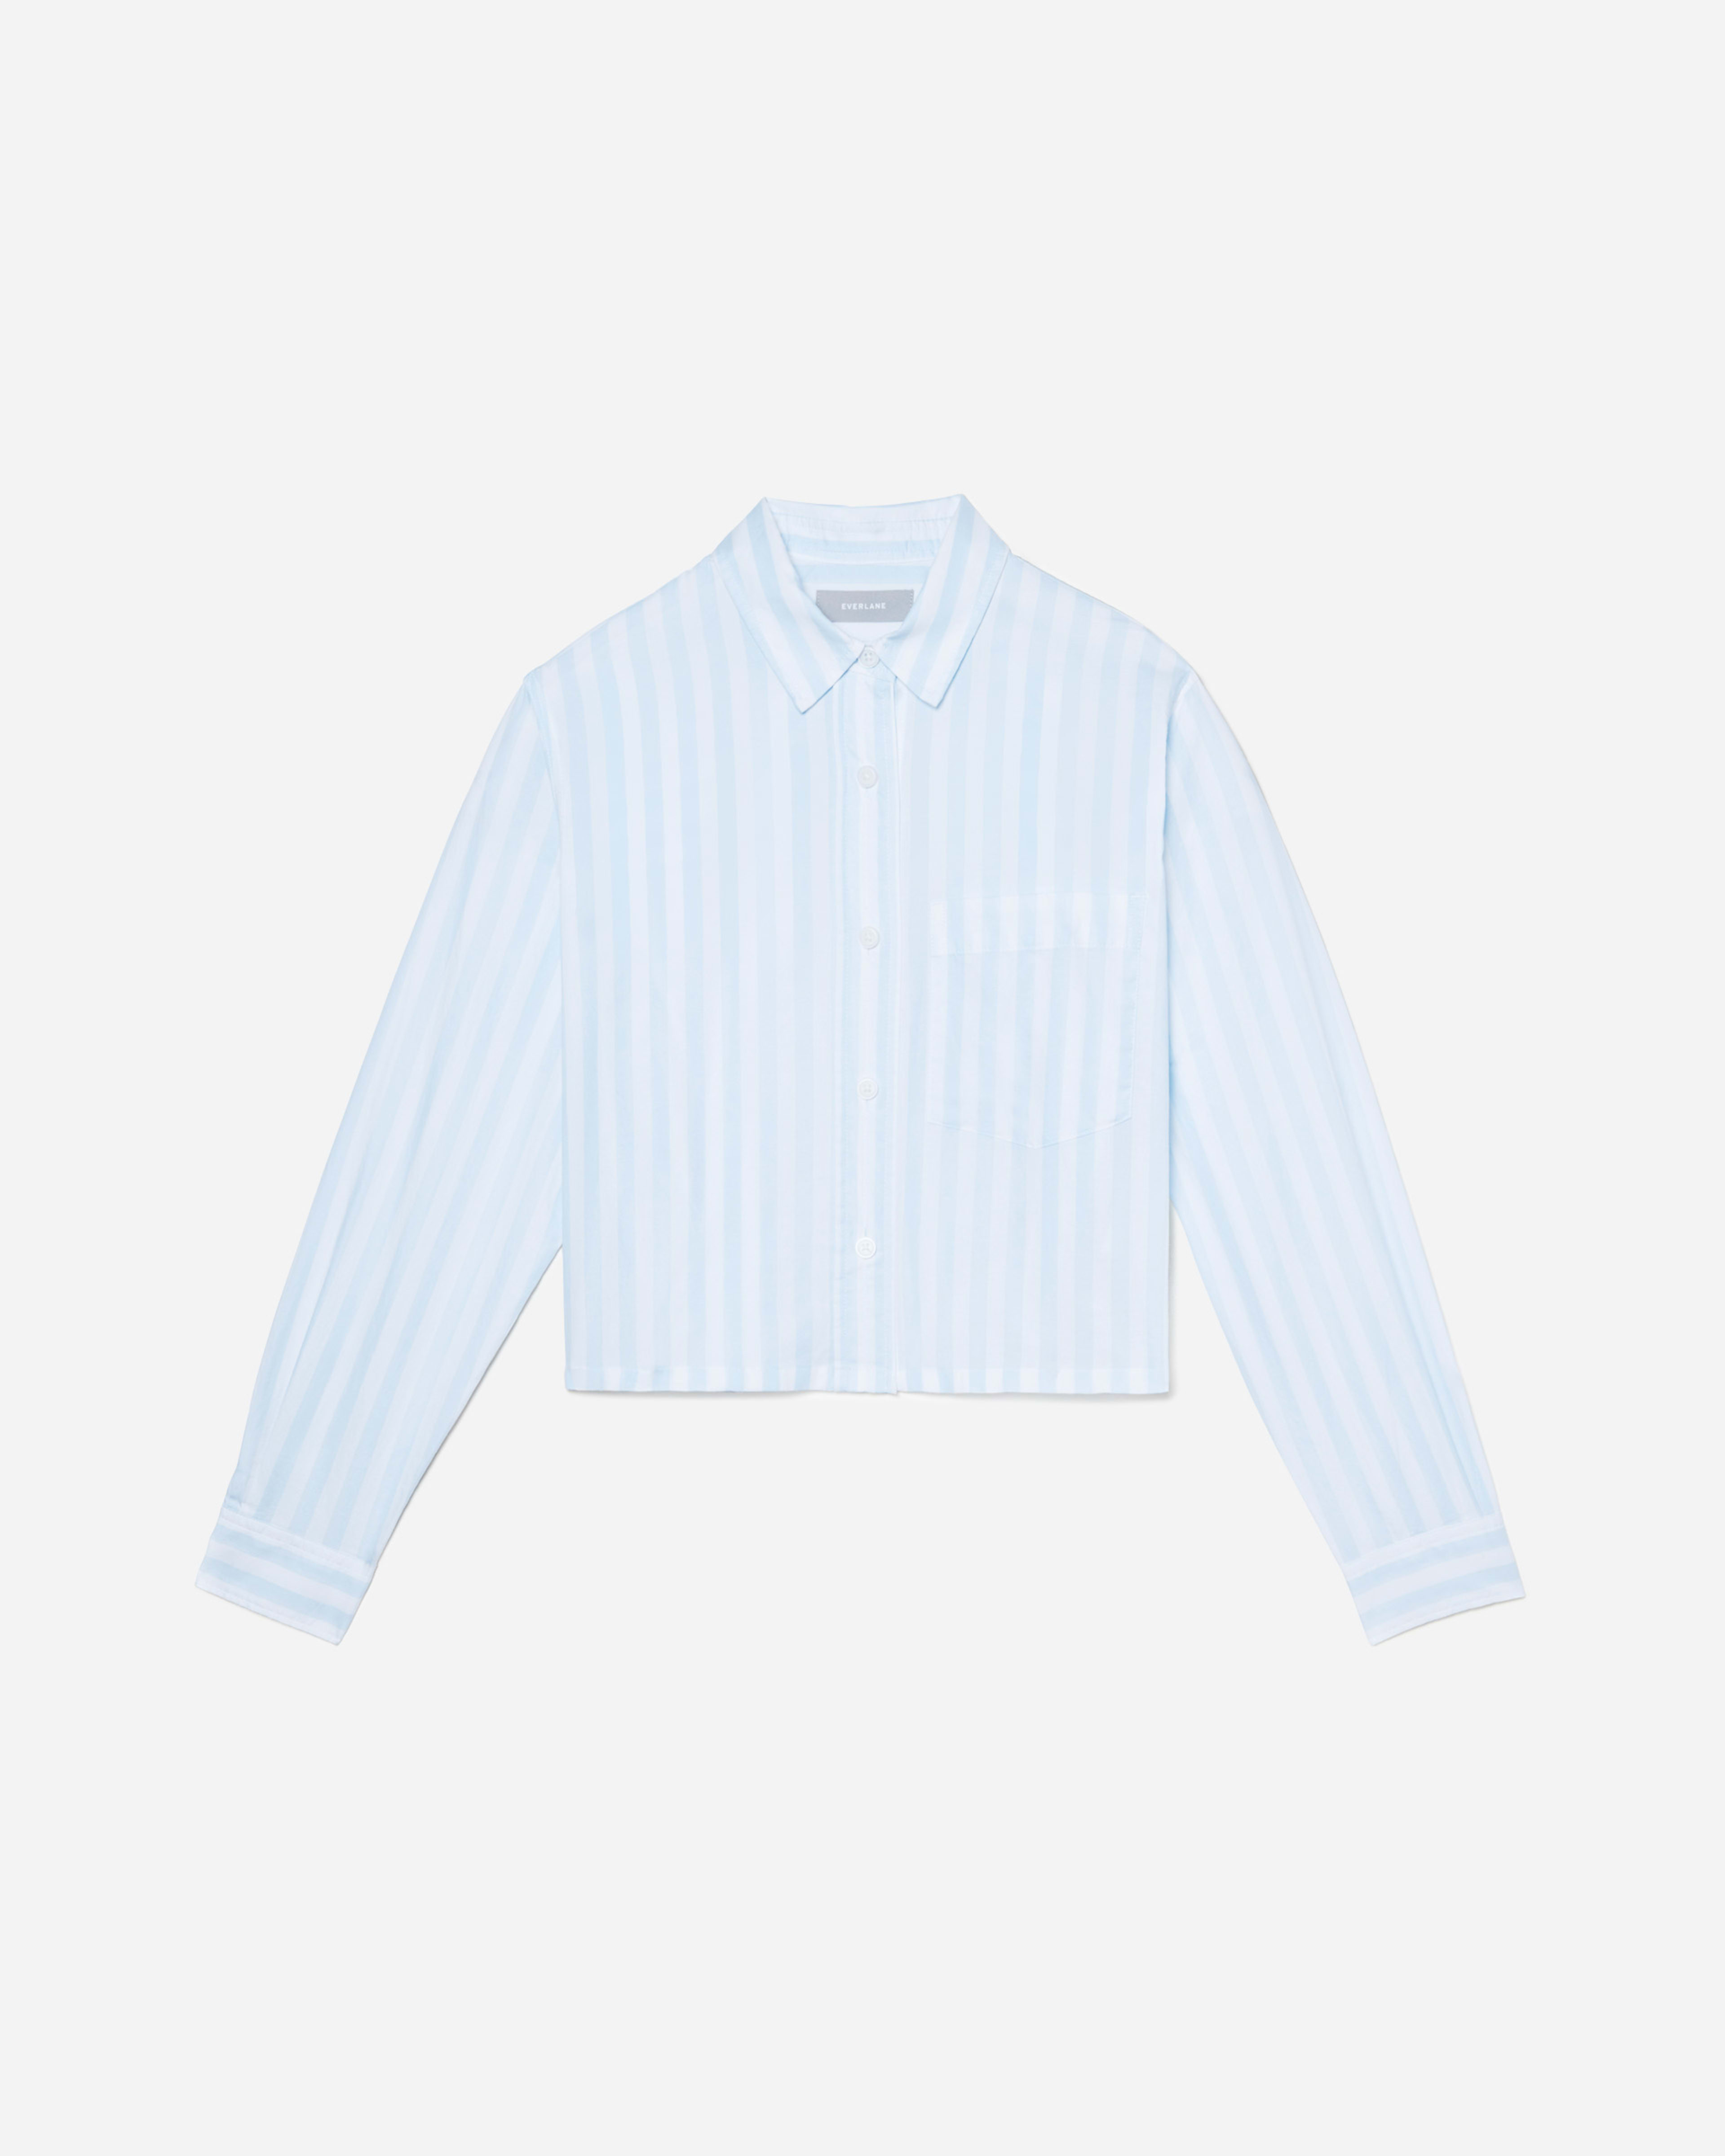 The Silky Cotton Way-Short Shirt Mariner Blue / White – Everlane